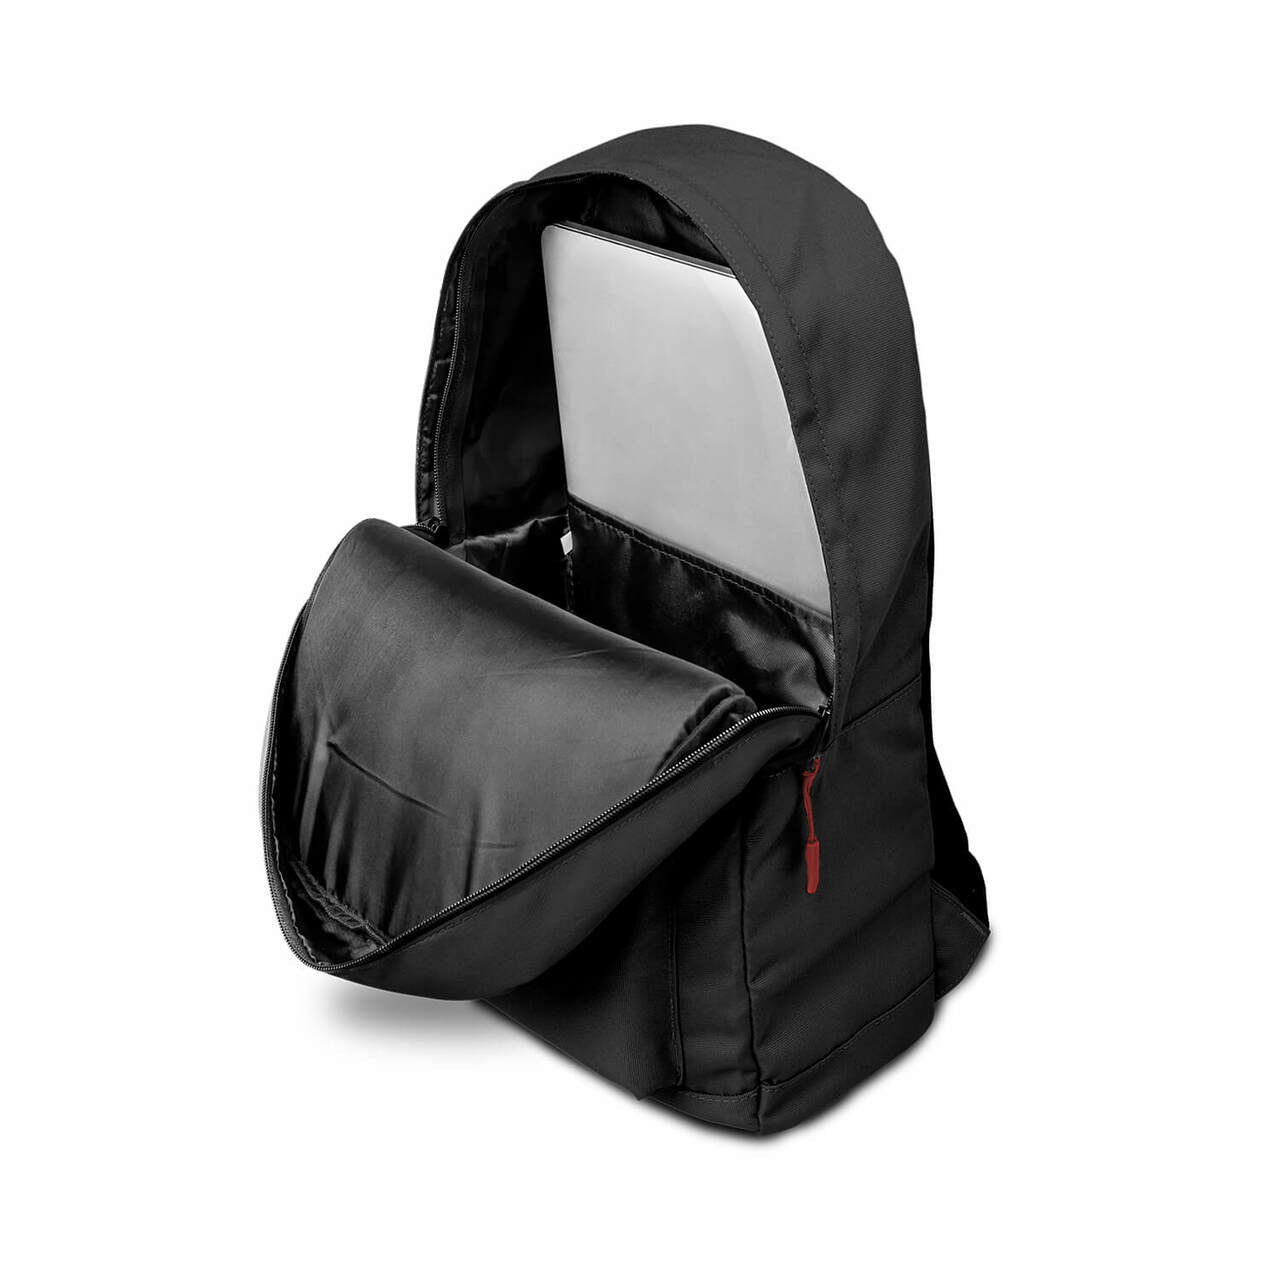 Minnesota Wild Campus Laptop Backpack- Black